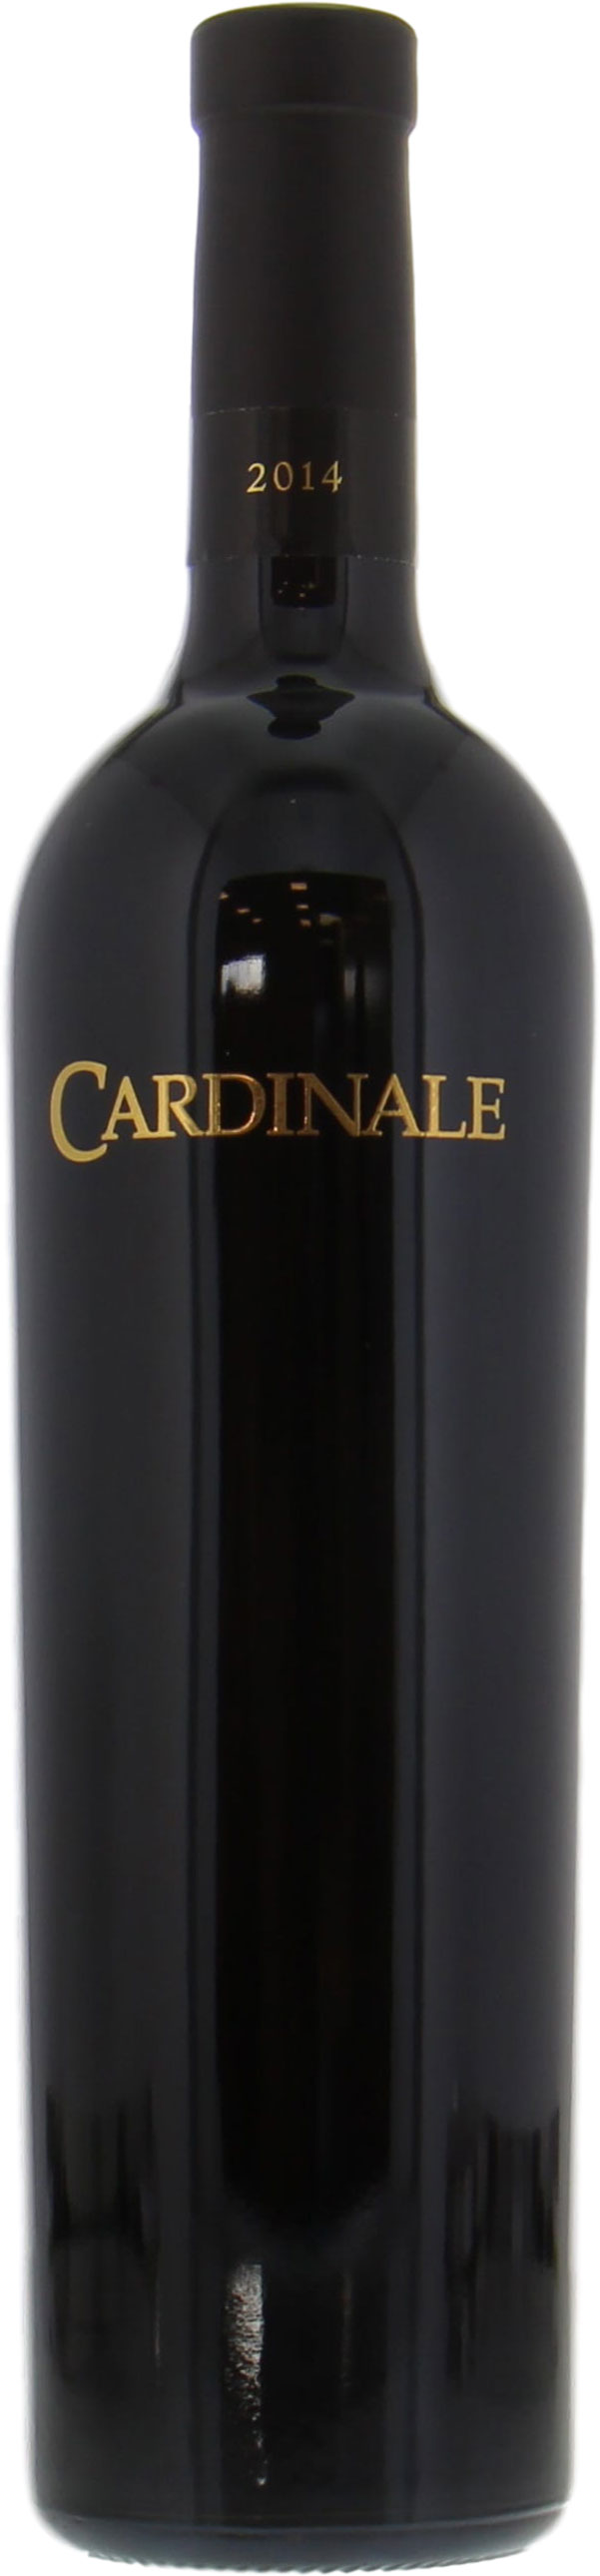 Cardinale - Proprietary Red Wine 2014